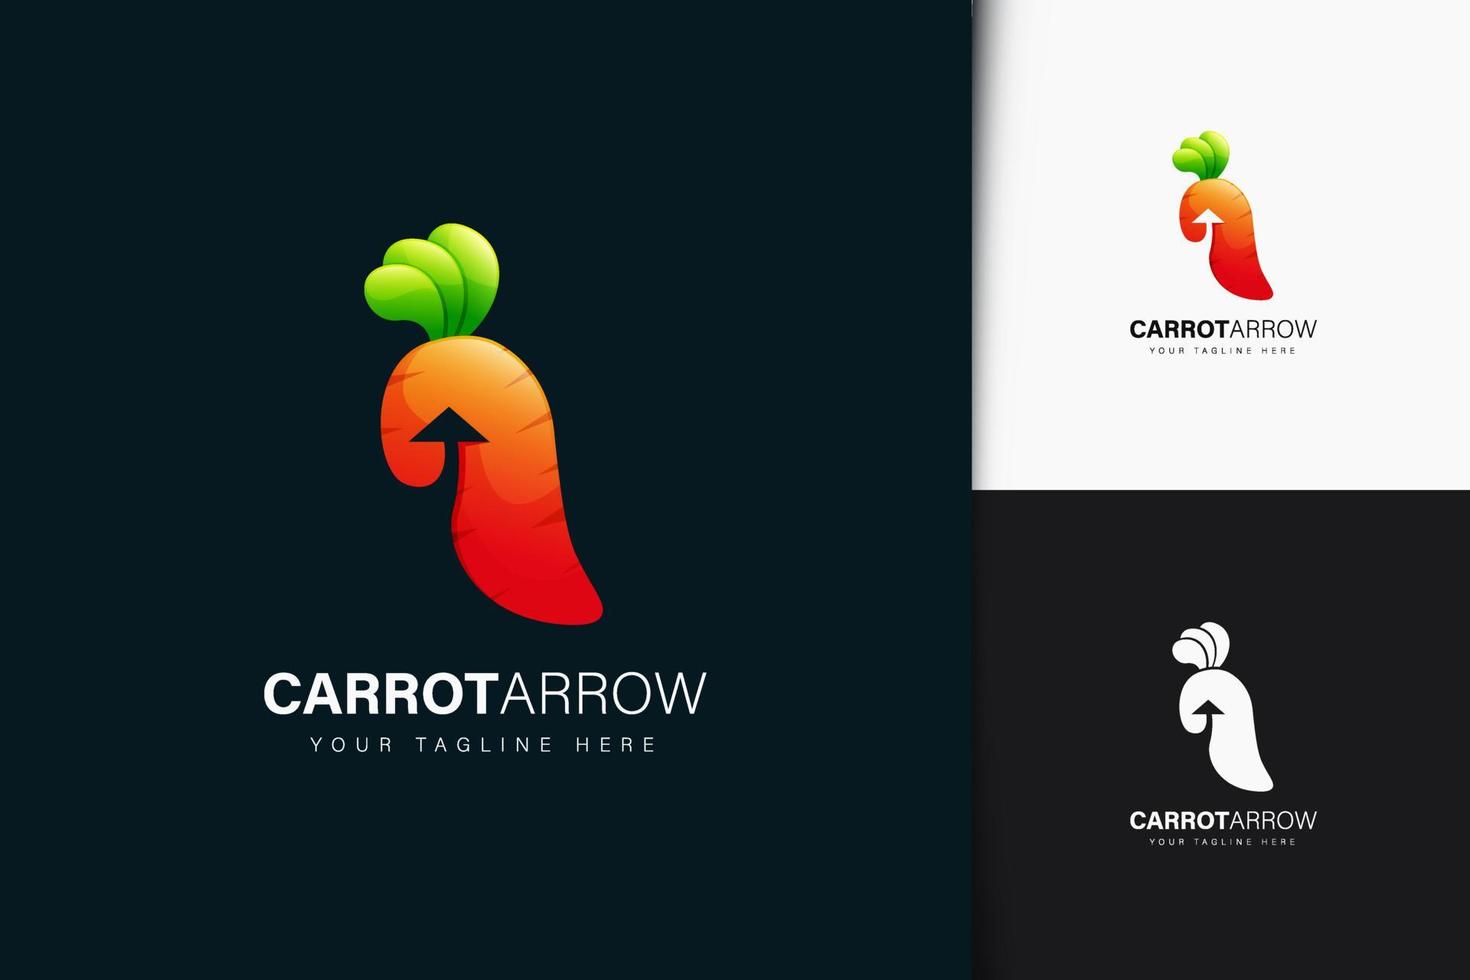 Carrot arrow logo design with gradient vector